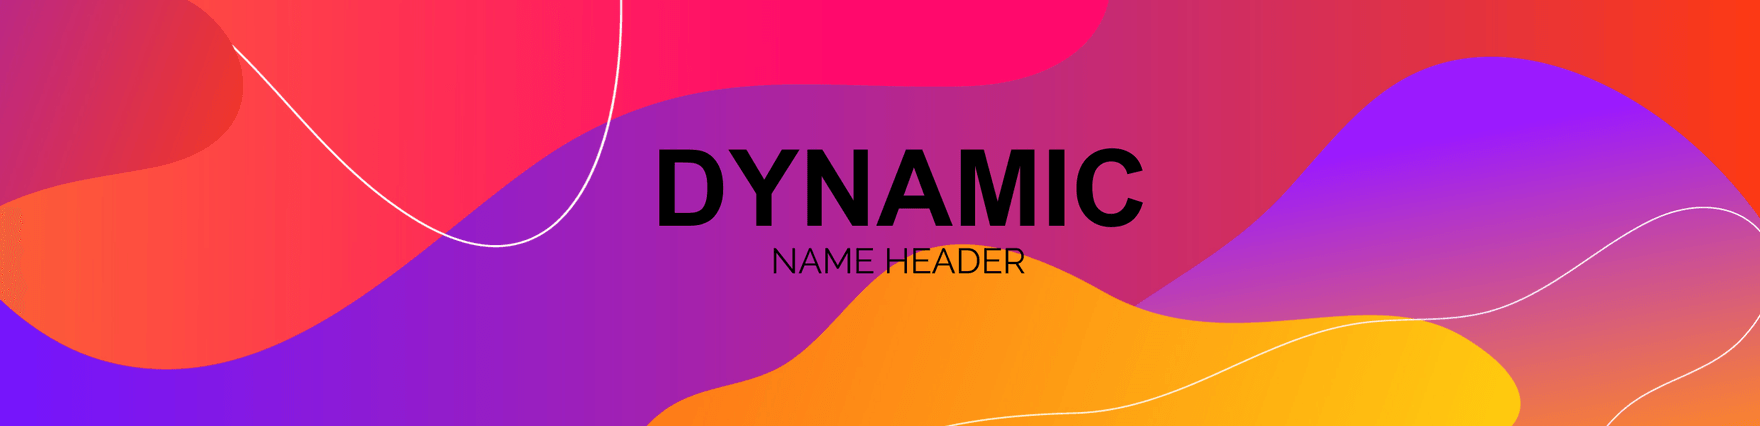 Dynamic Name Header Template